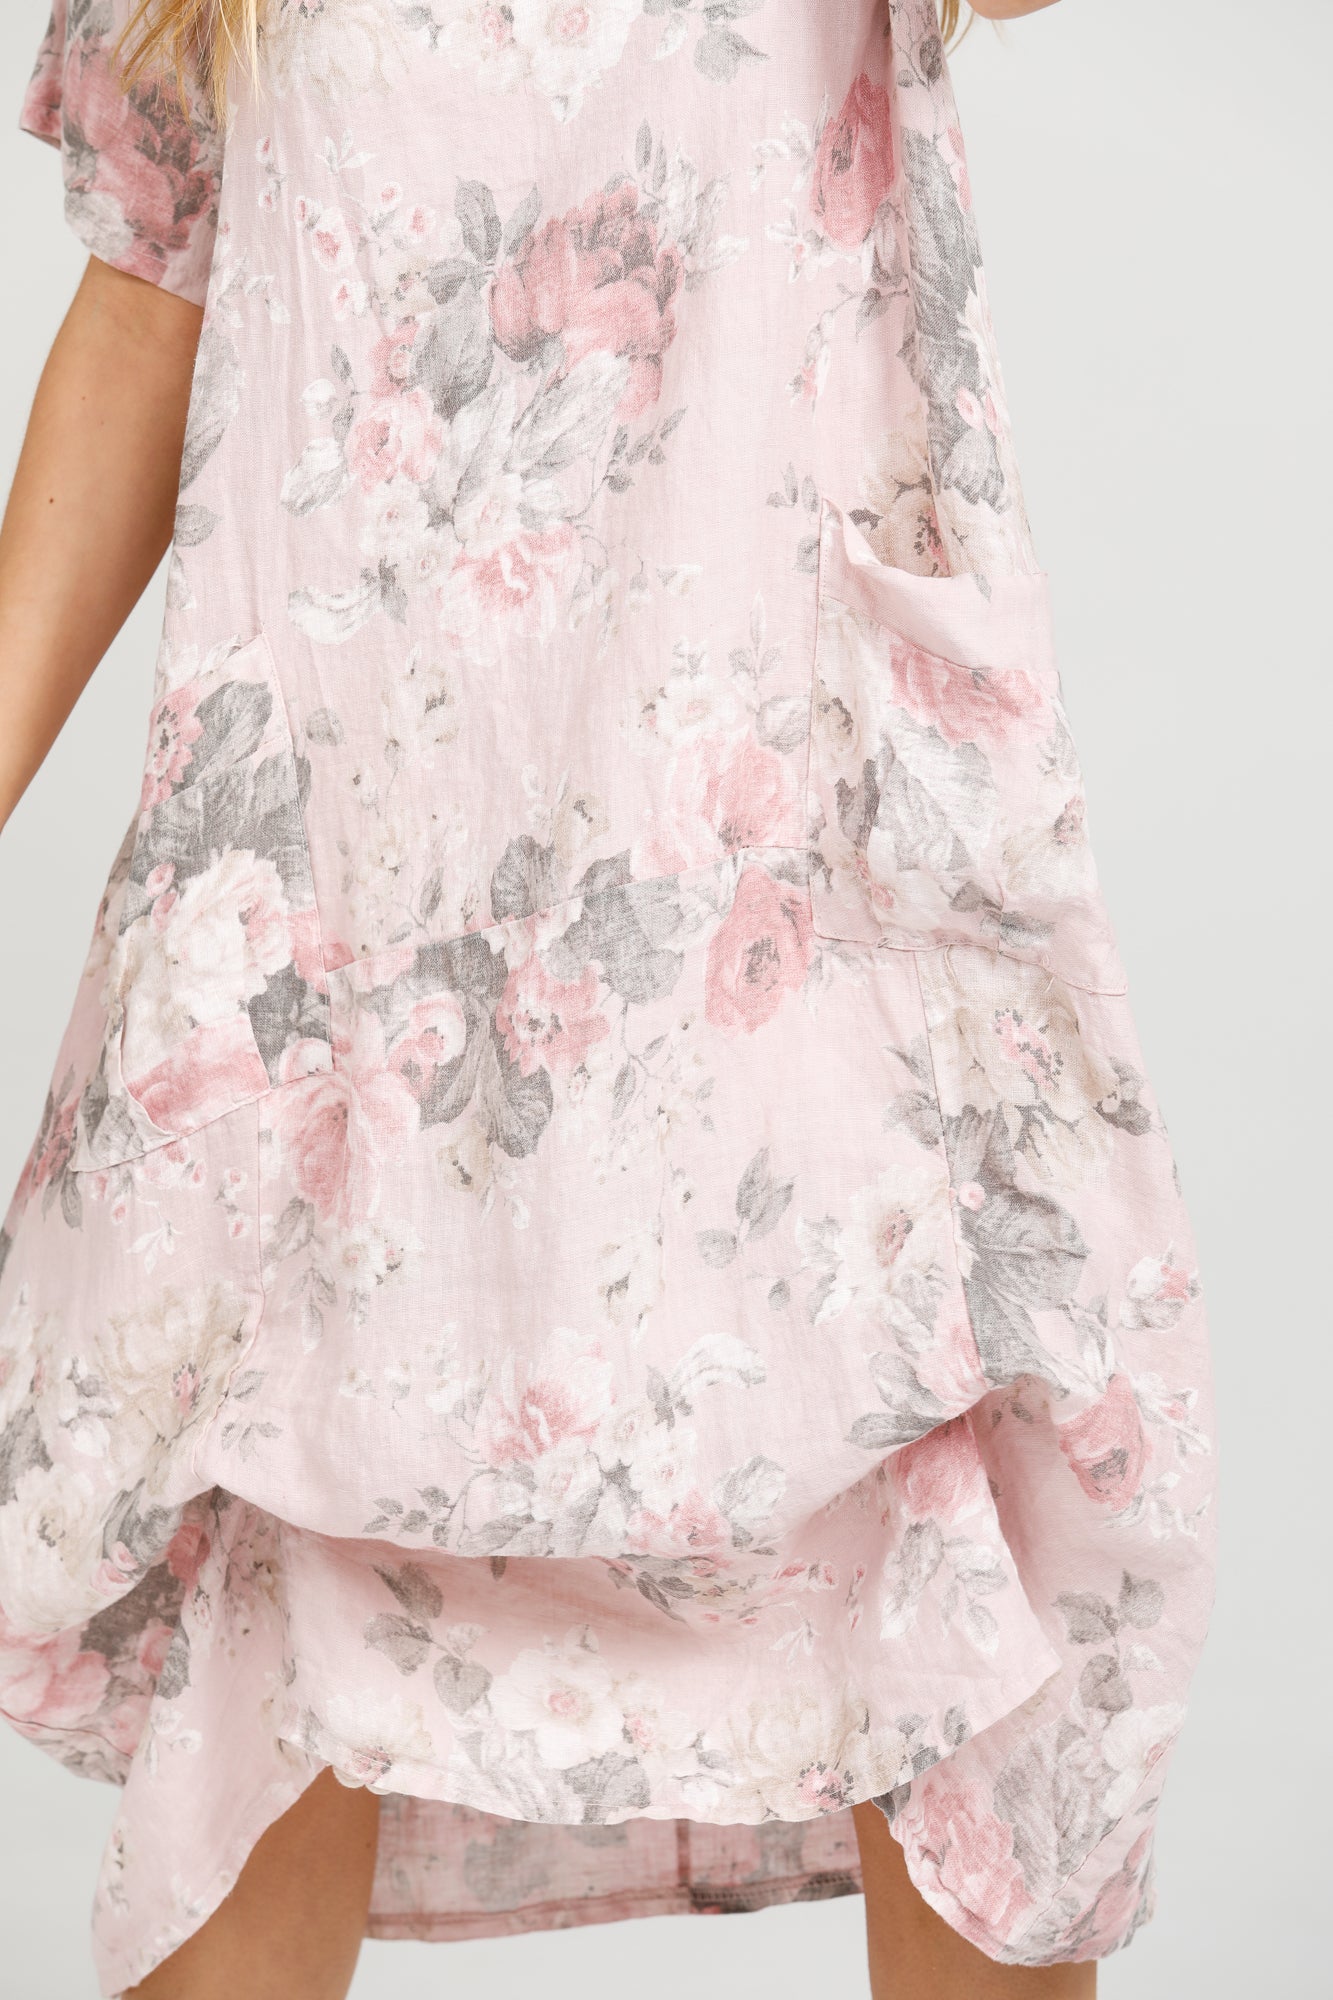 Primavera Linen dress. Tearose Floral